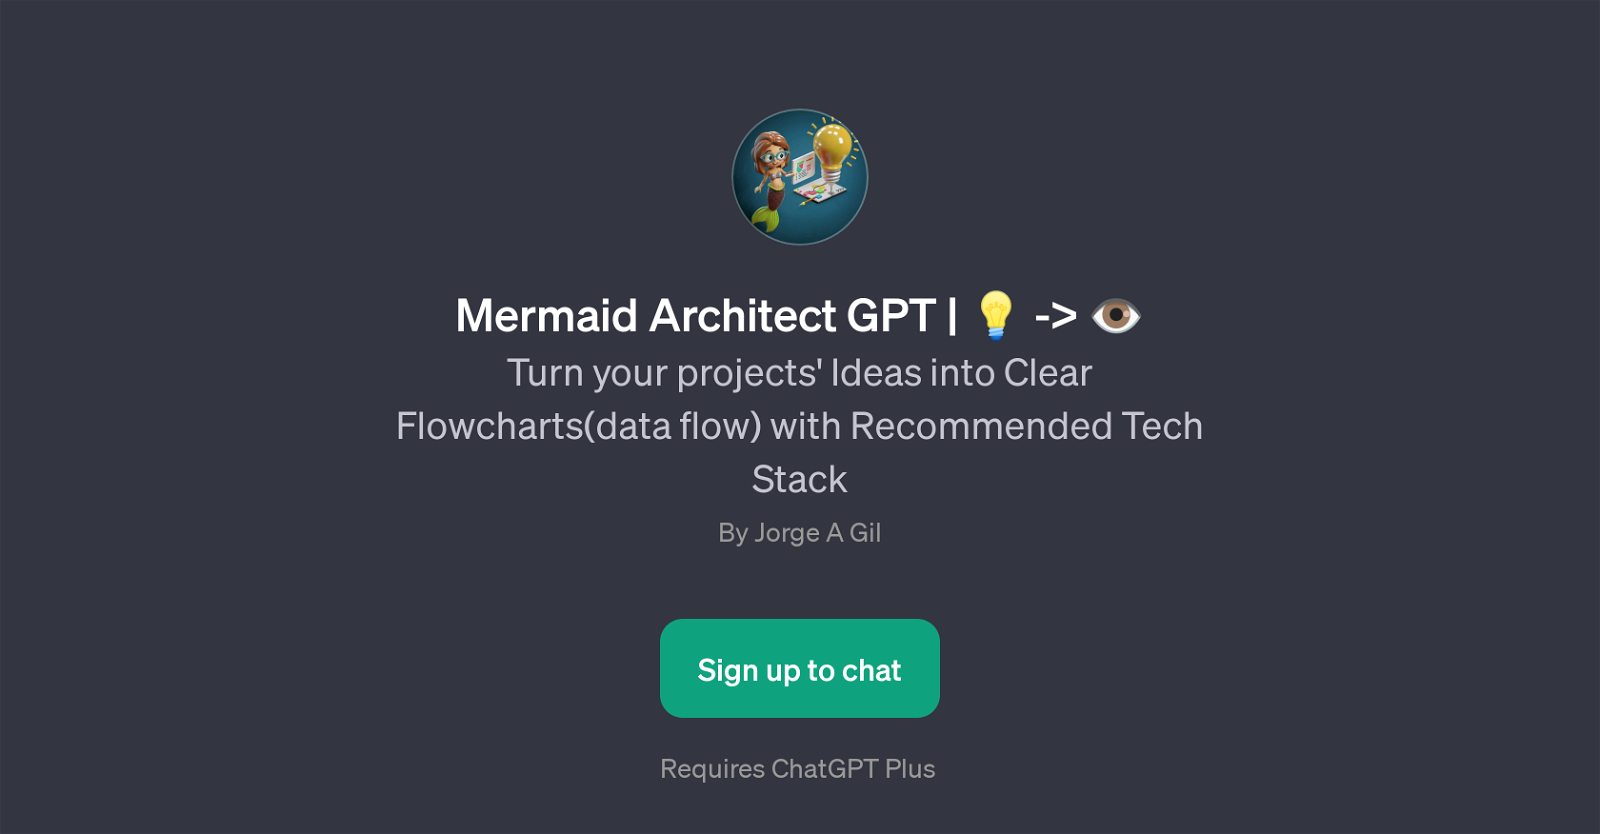 Mermaid Architect GPT website